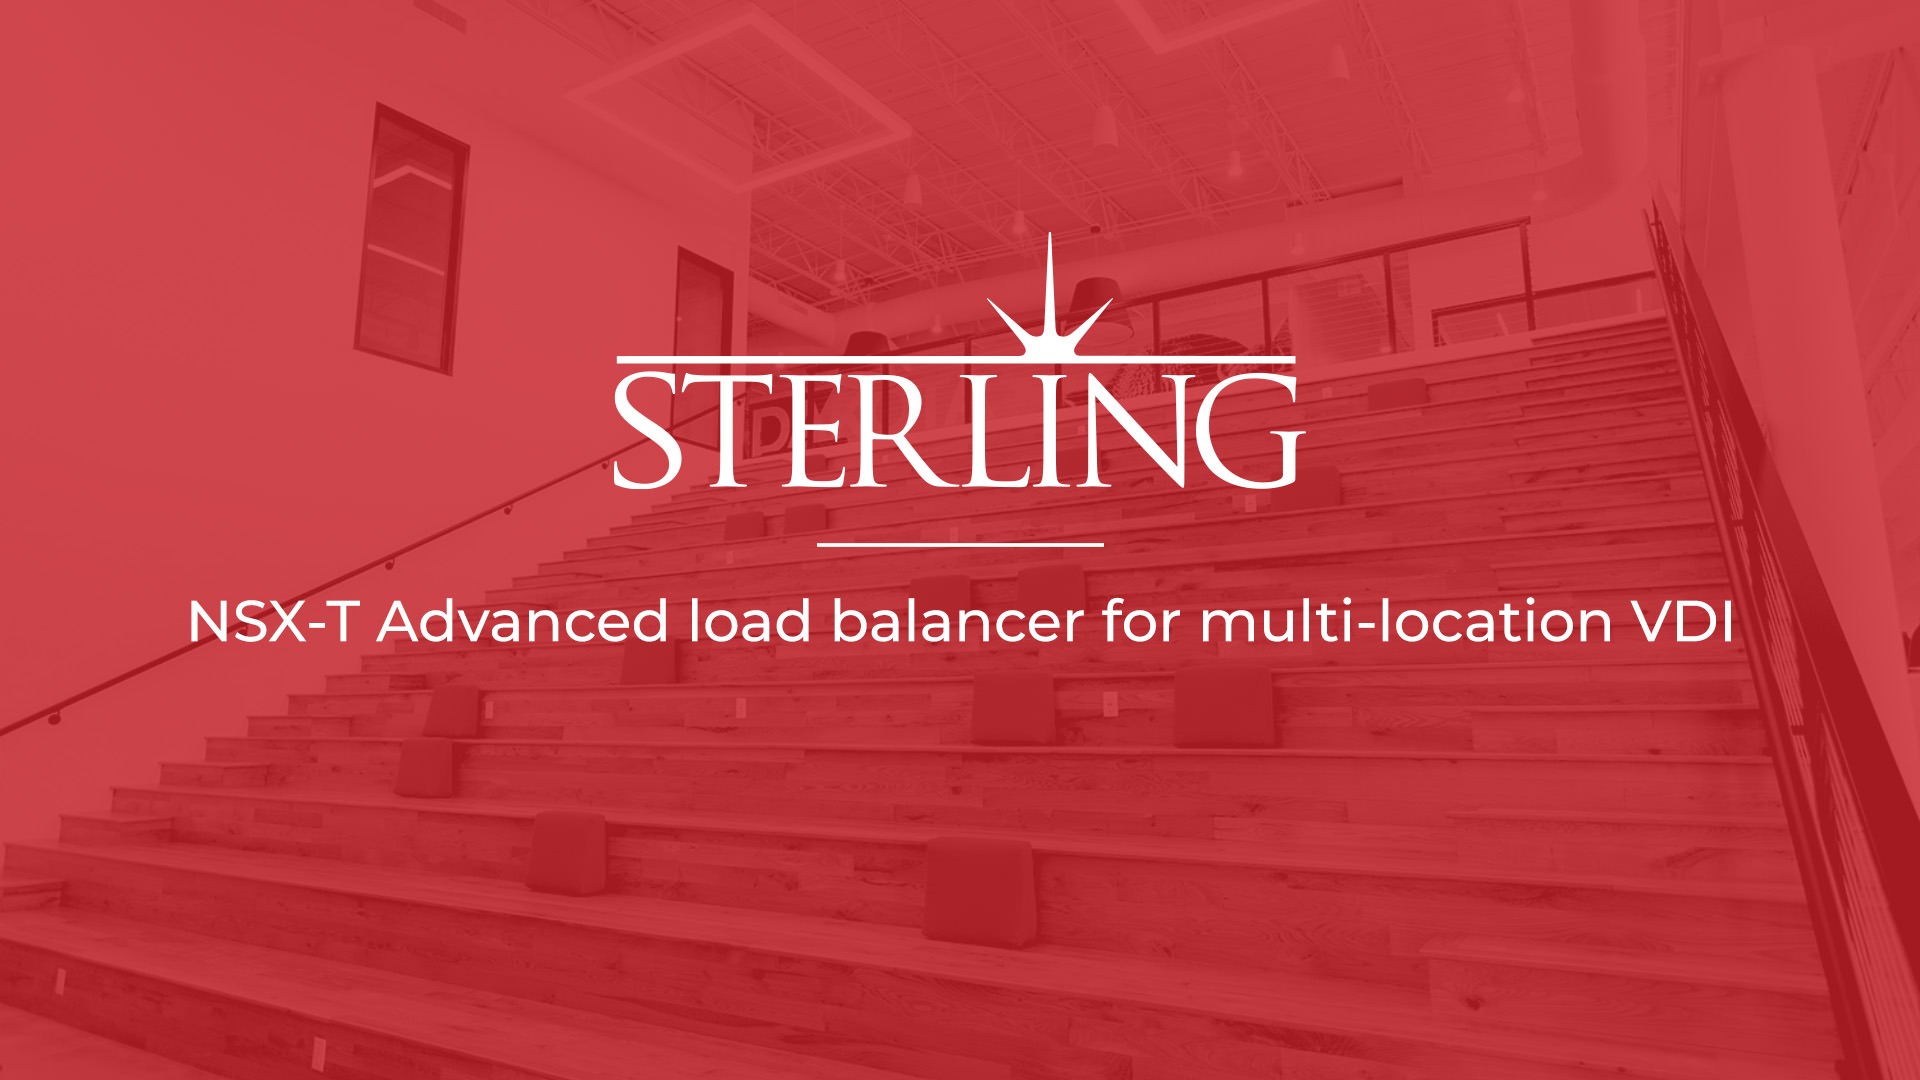 NSX-T Advanced load balancer for multi-location VDI